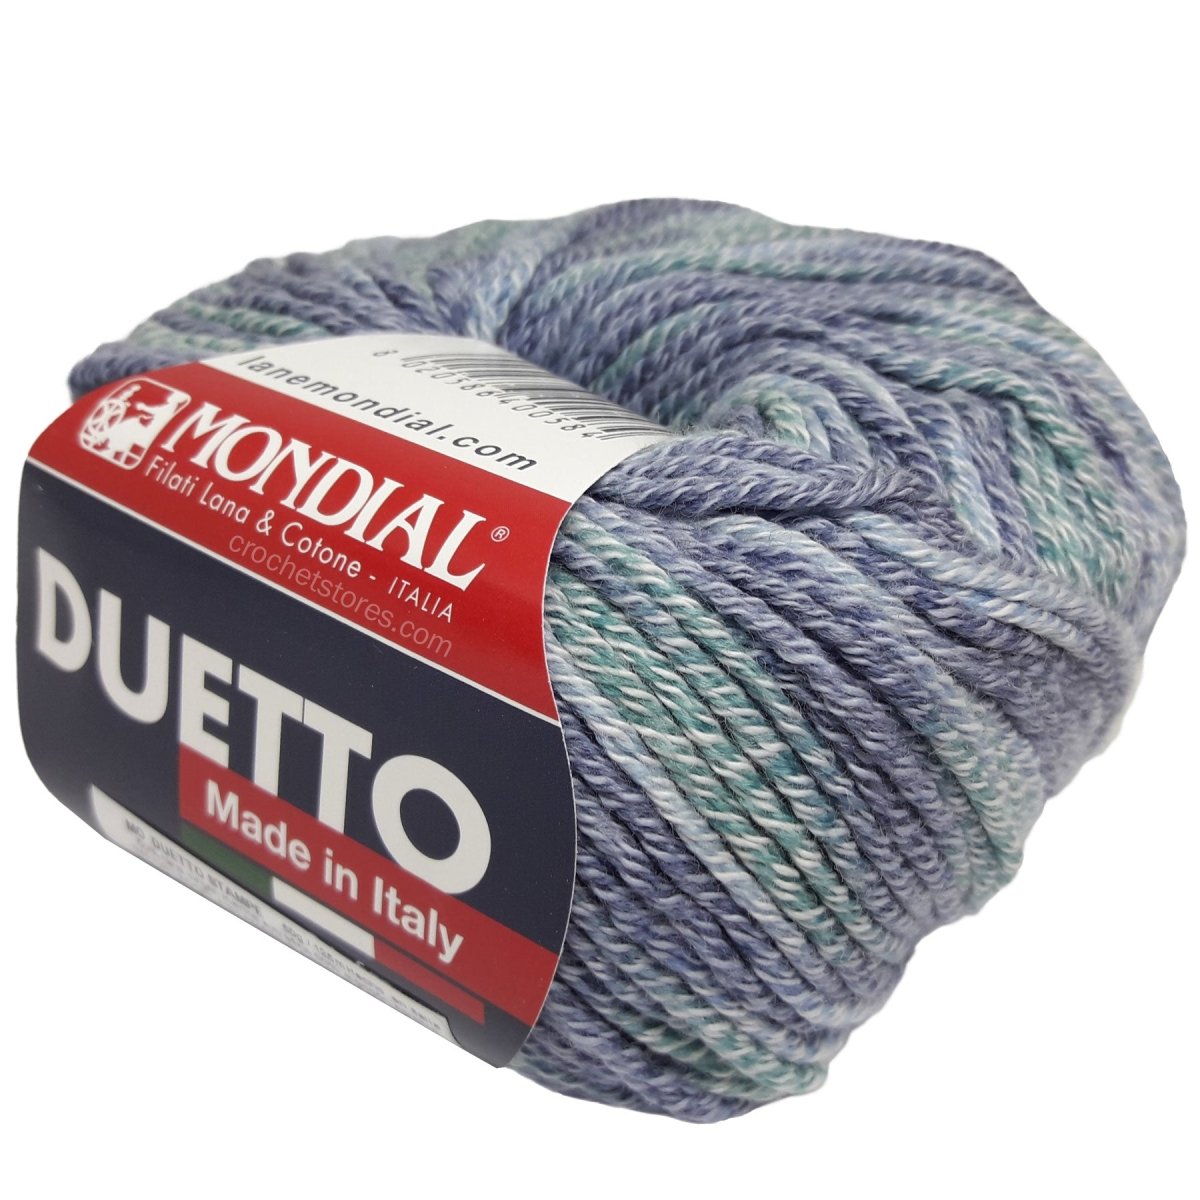 DUETTO - Crochetstores1175-8318020586400331